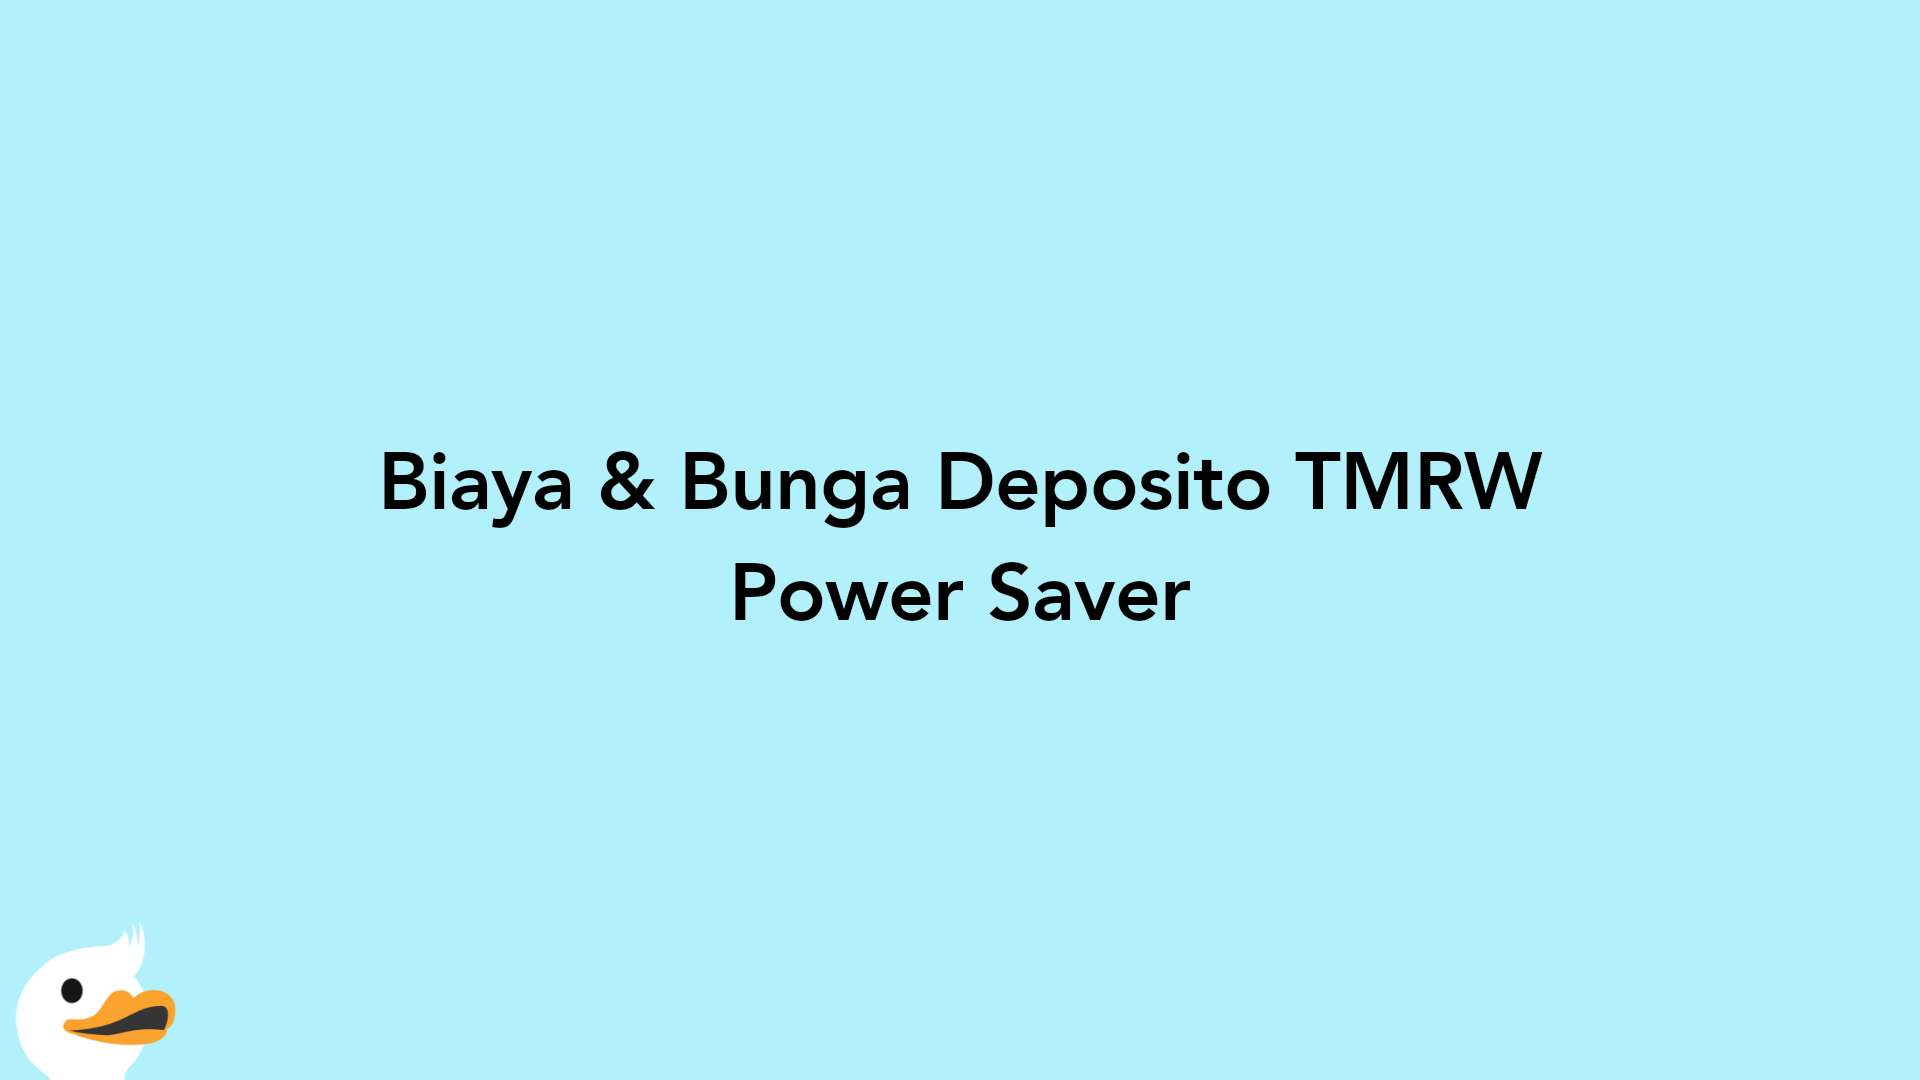 Biaya & Bunga Deposito TMRW Power Saver